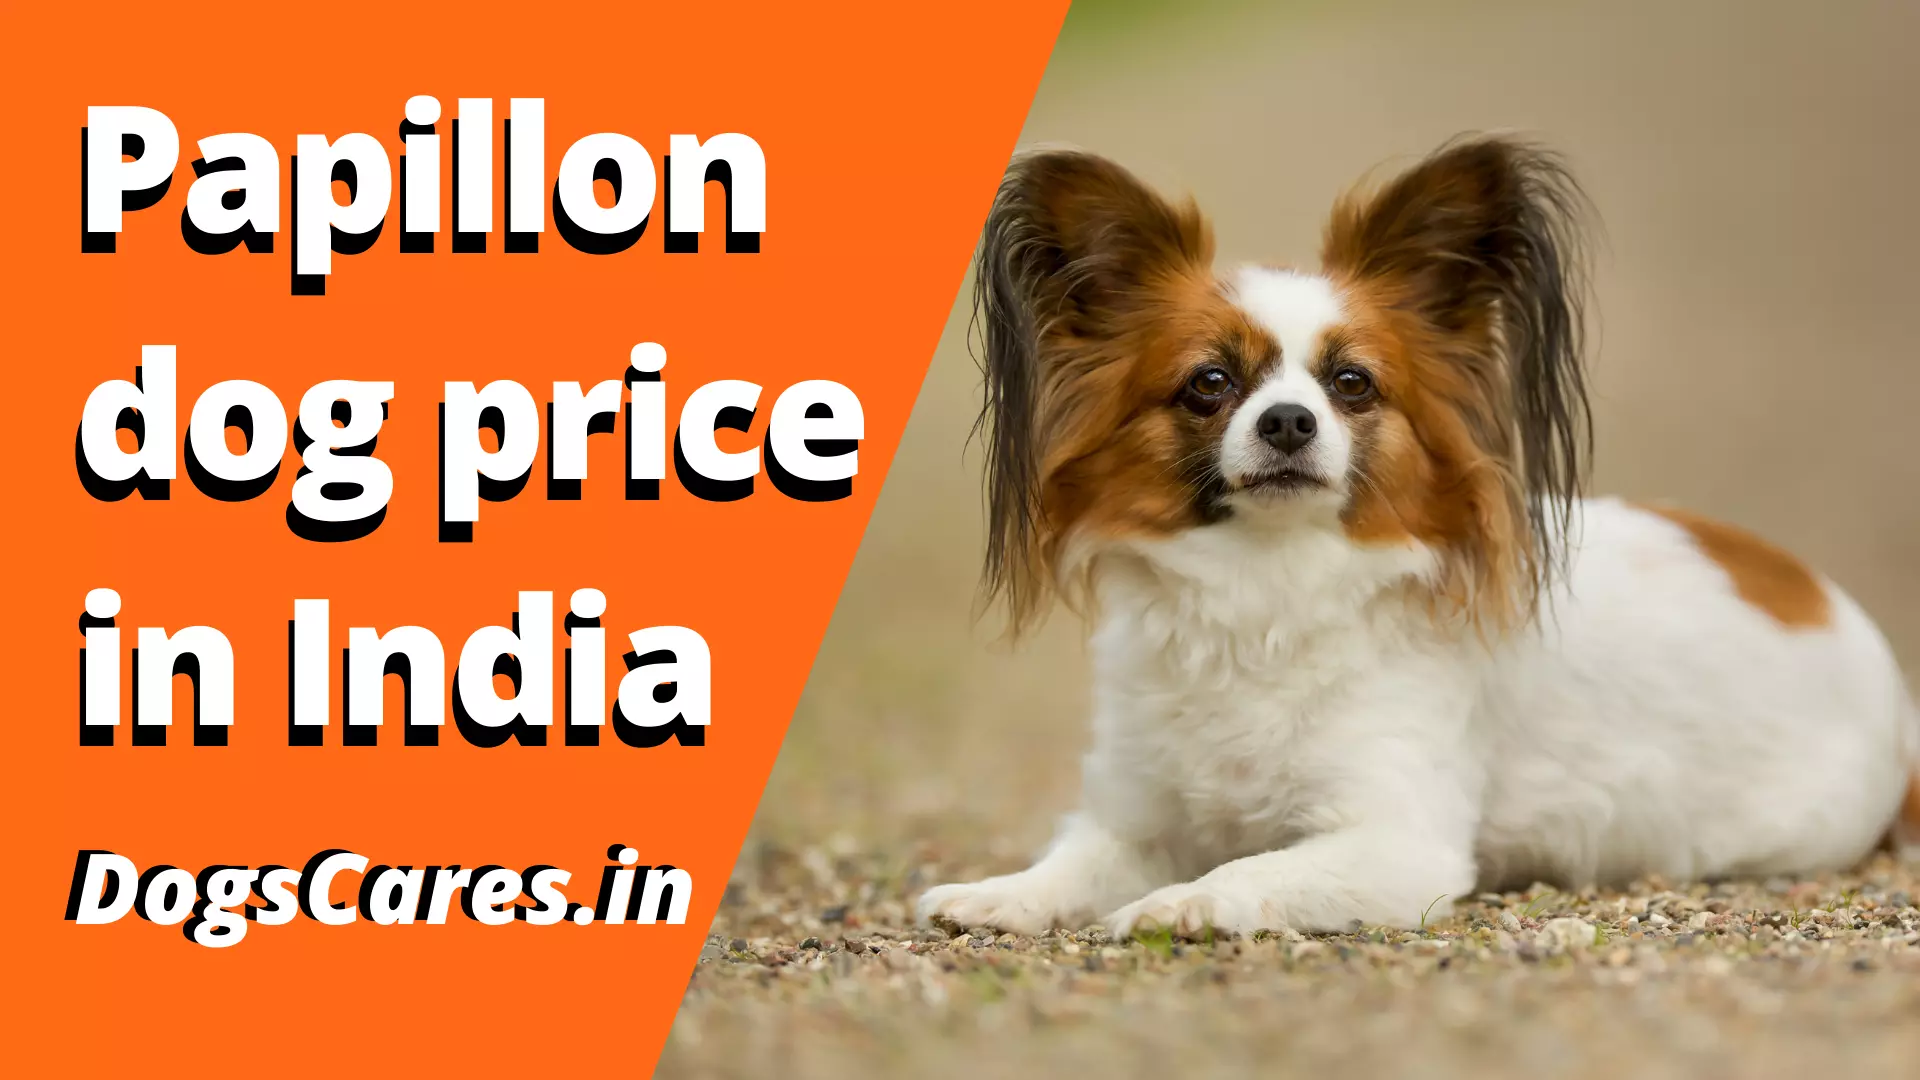 Papillon dog price in India